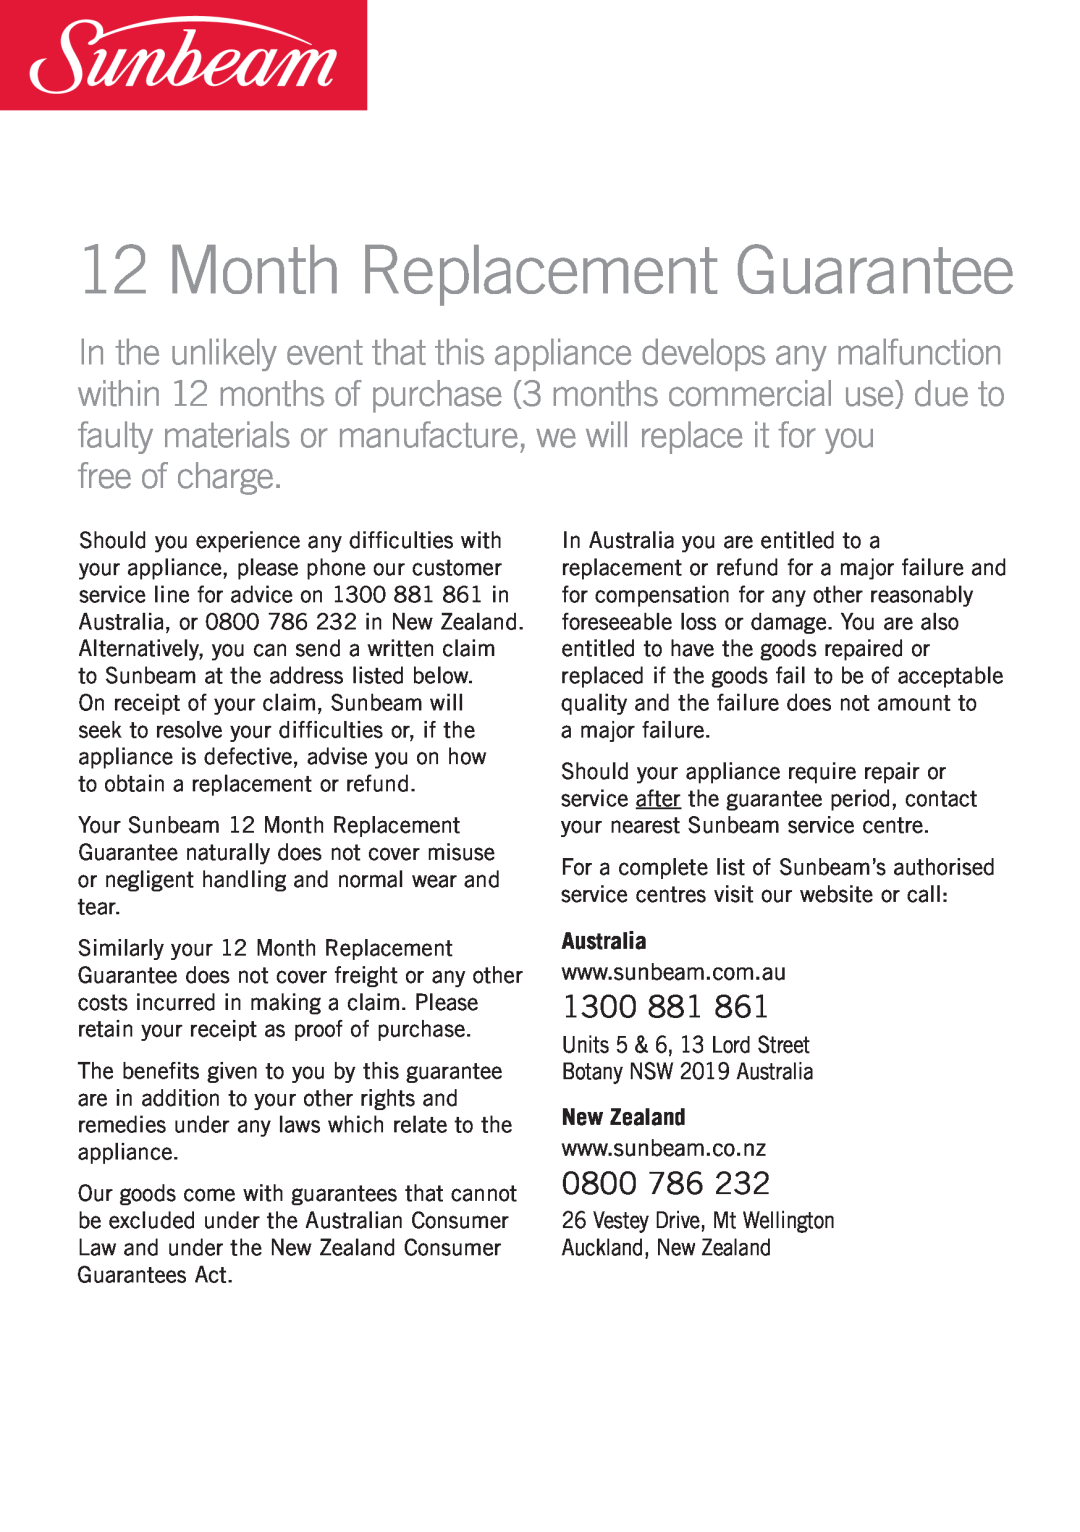 Sunbeam VS4300, VAC430 manual 1300, 0800 786, Australia, New Zealand, Month Replacement Guarantee, free of charge 